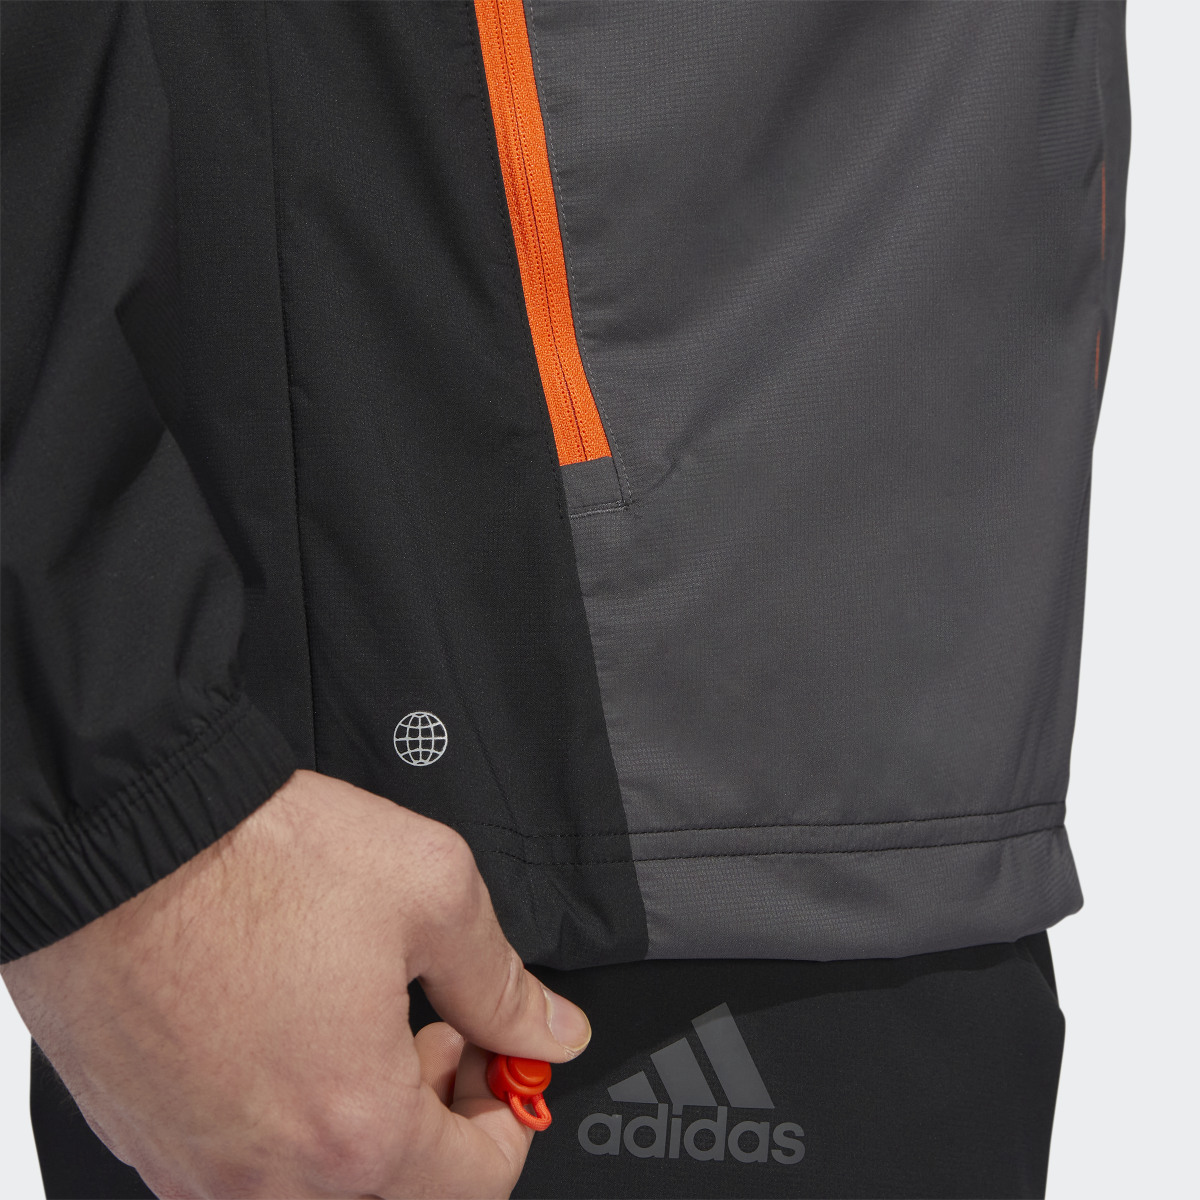 Adidas Provisional Full-Zip Golf Jacket. 7